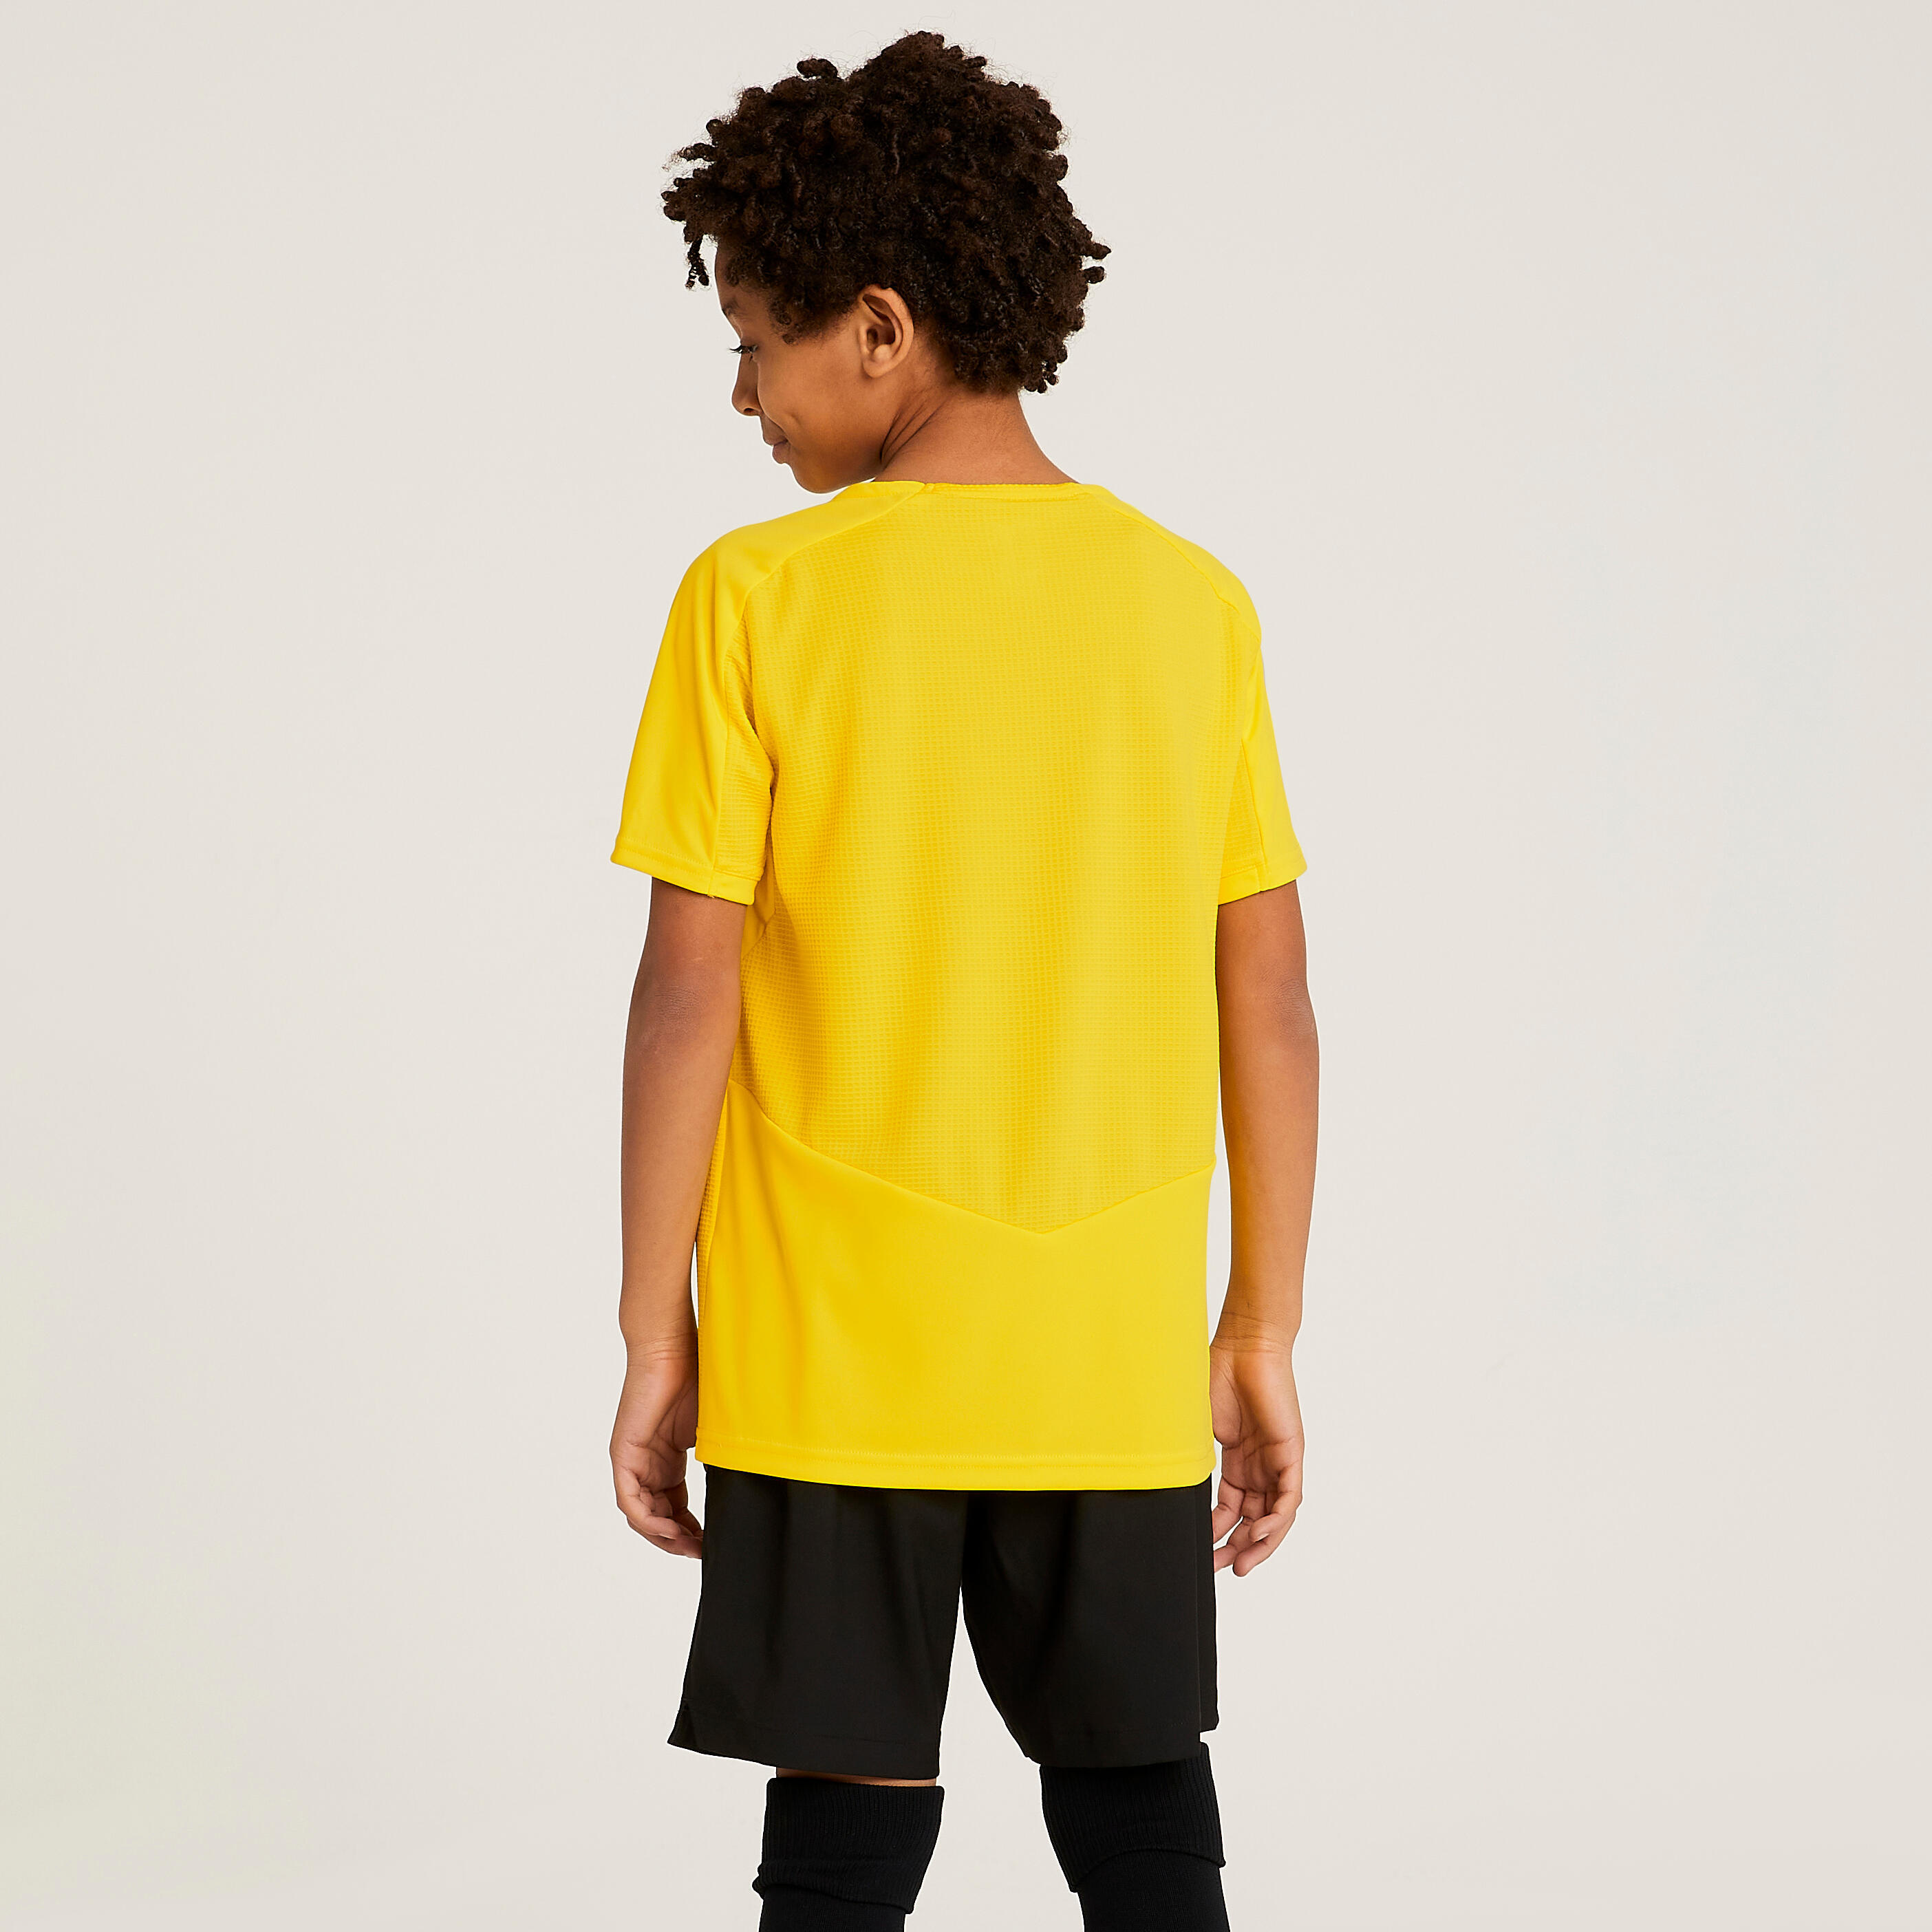 Refurbished Kids Short-Sleeved Football Shirt - B Grade 4/7